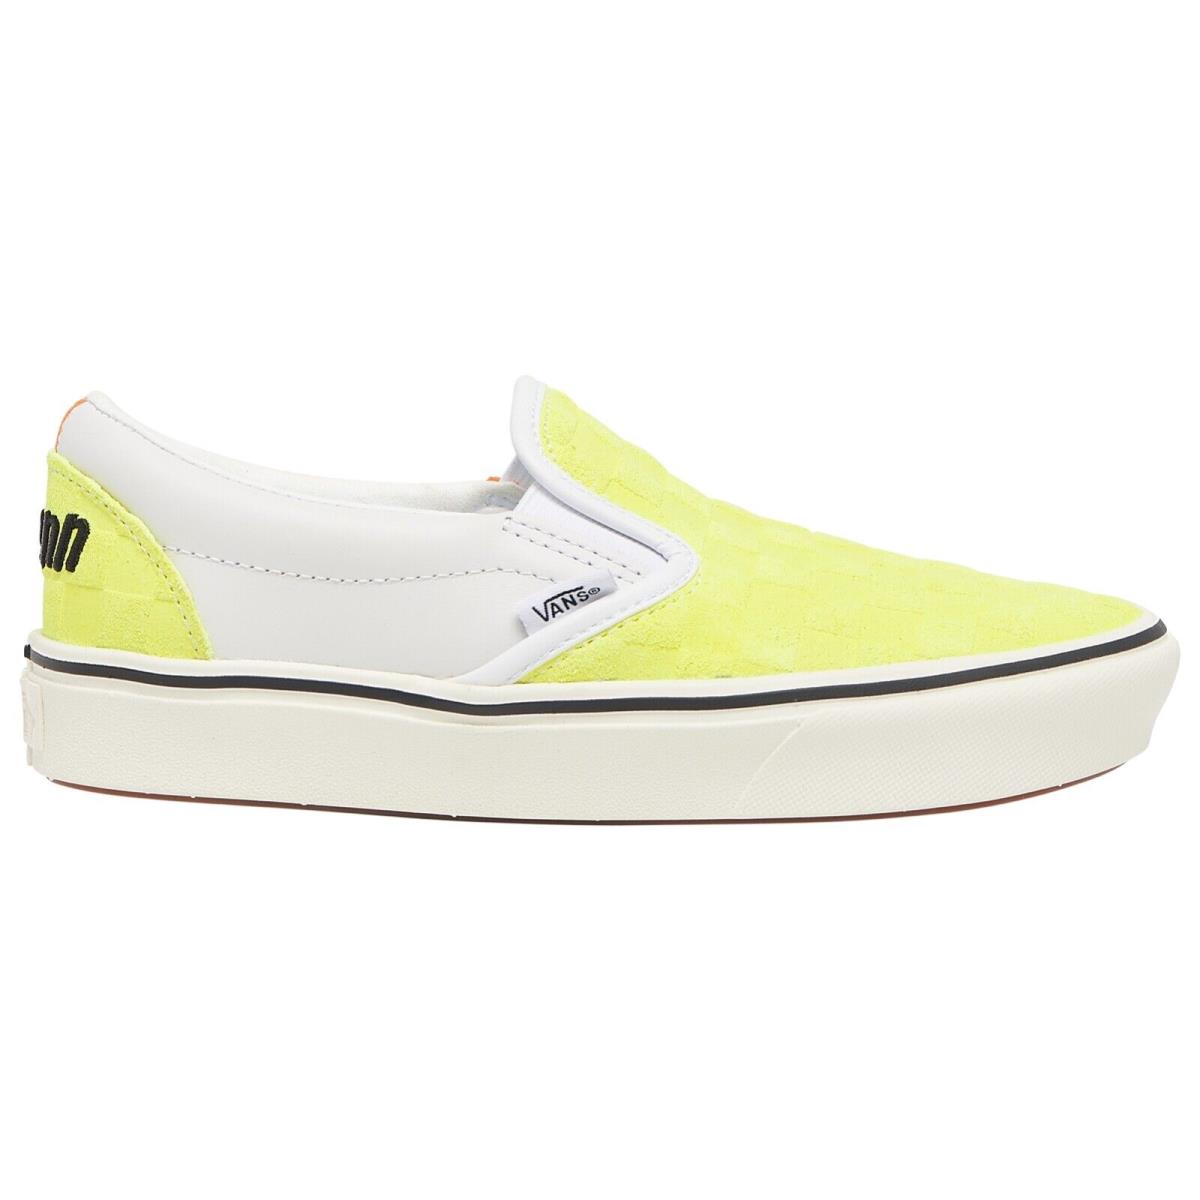 Penn x Comfycrush Slip-on `yellow Orange` Vans Classic Men`s - Multicolor